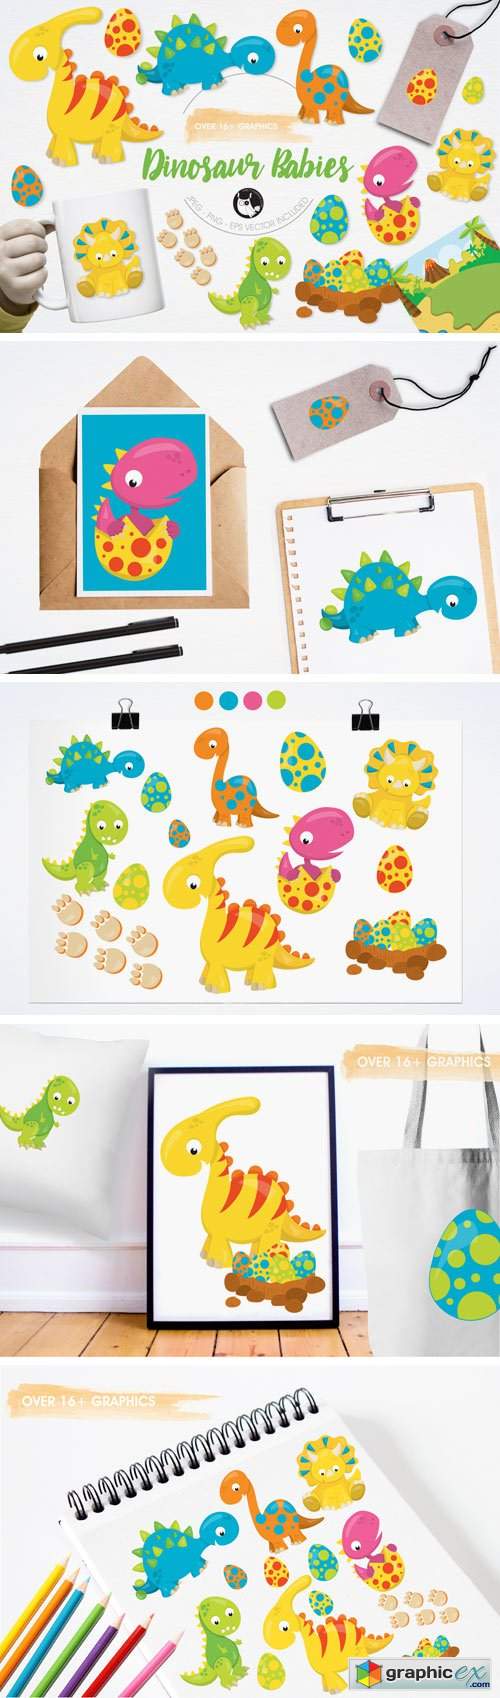 Dinosaur Babies Graphics and Illustrations